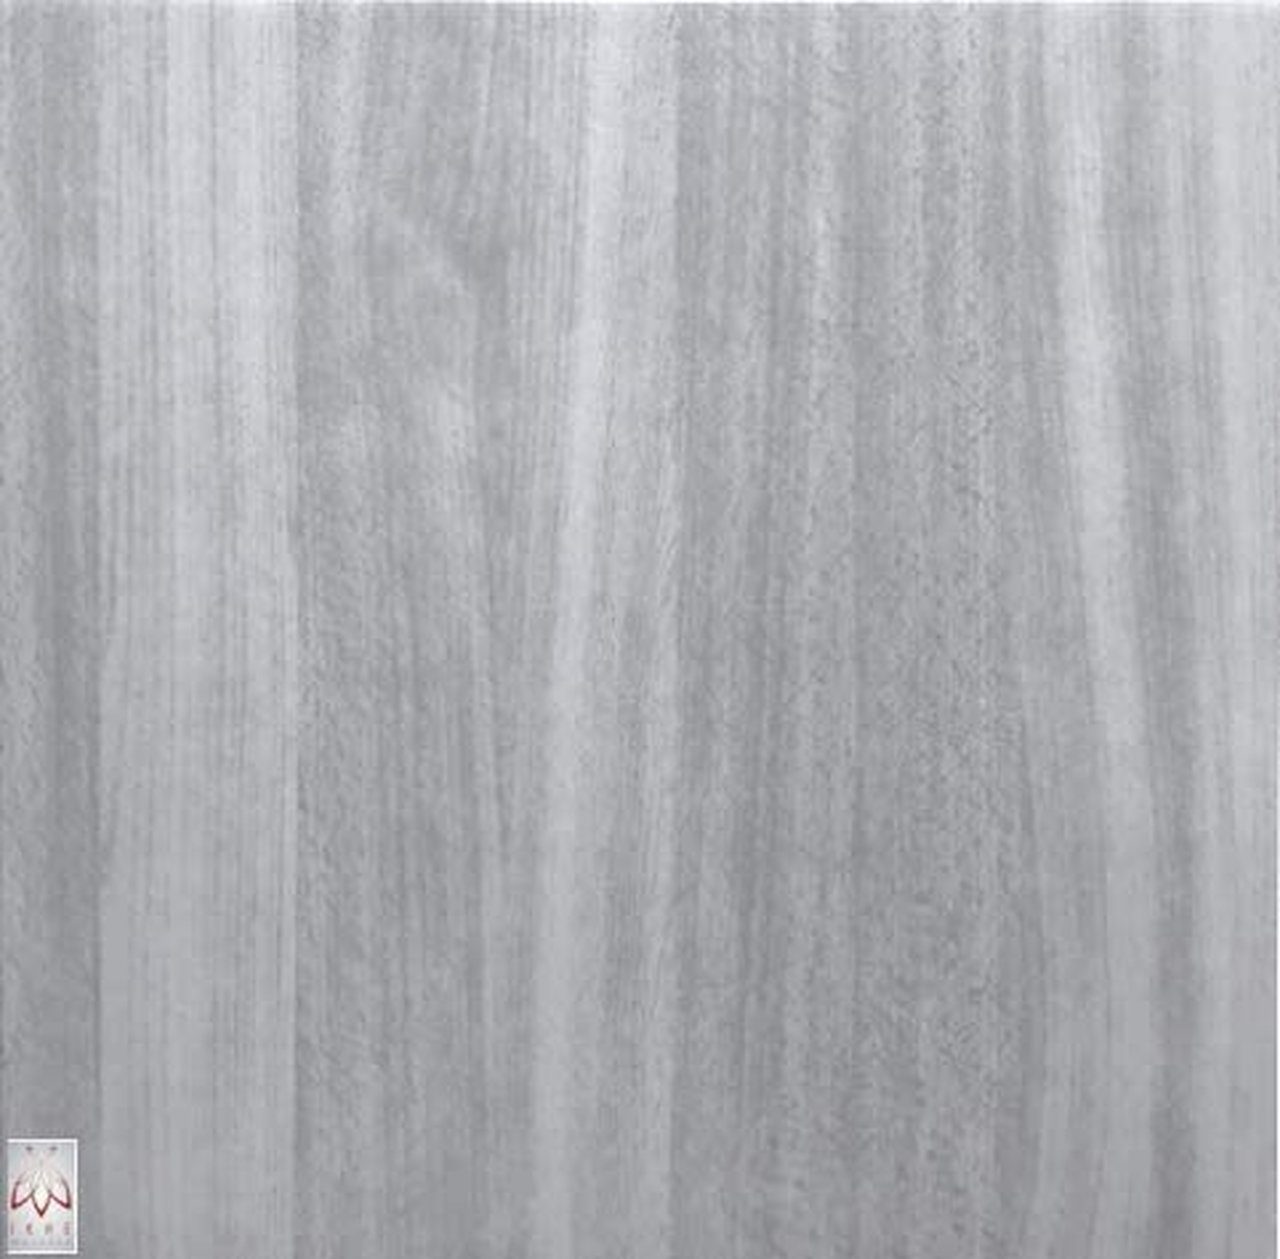 IKHEMalarka 3D Wandpaneel aus Polystyrol Styropor XPS Holzoptik, 0,25 qm, Paneelen für Decken Wand 50x50cm 3mm Stärke